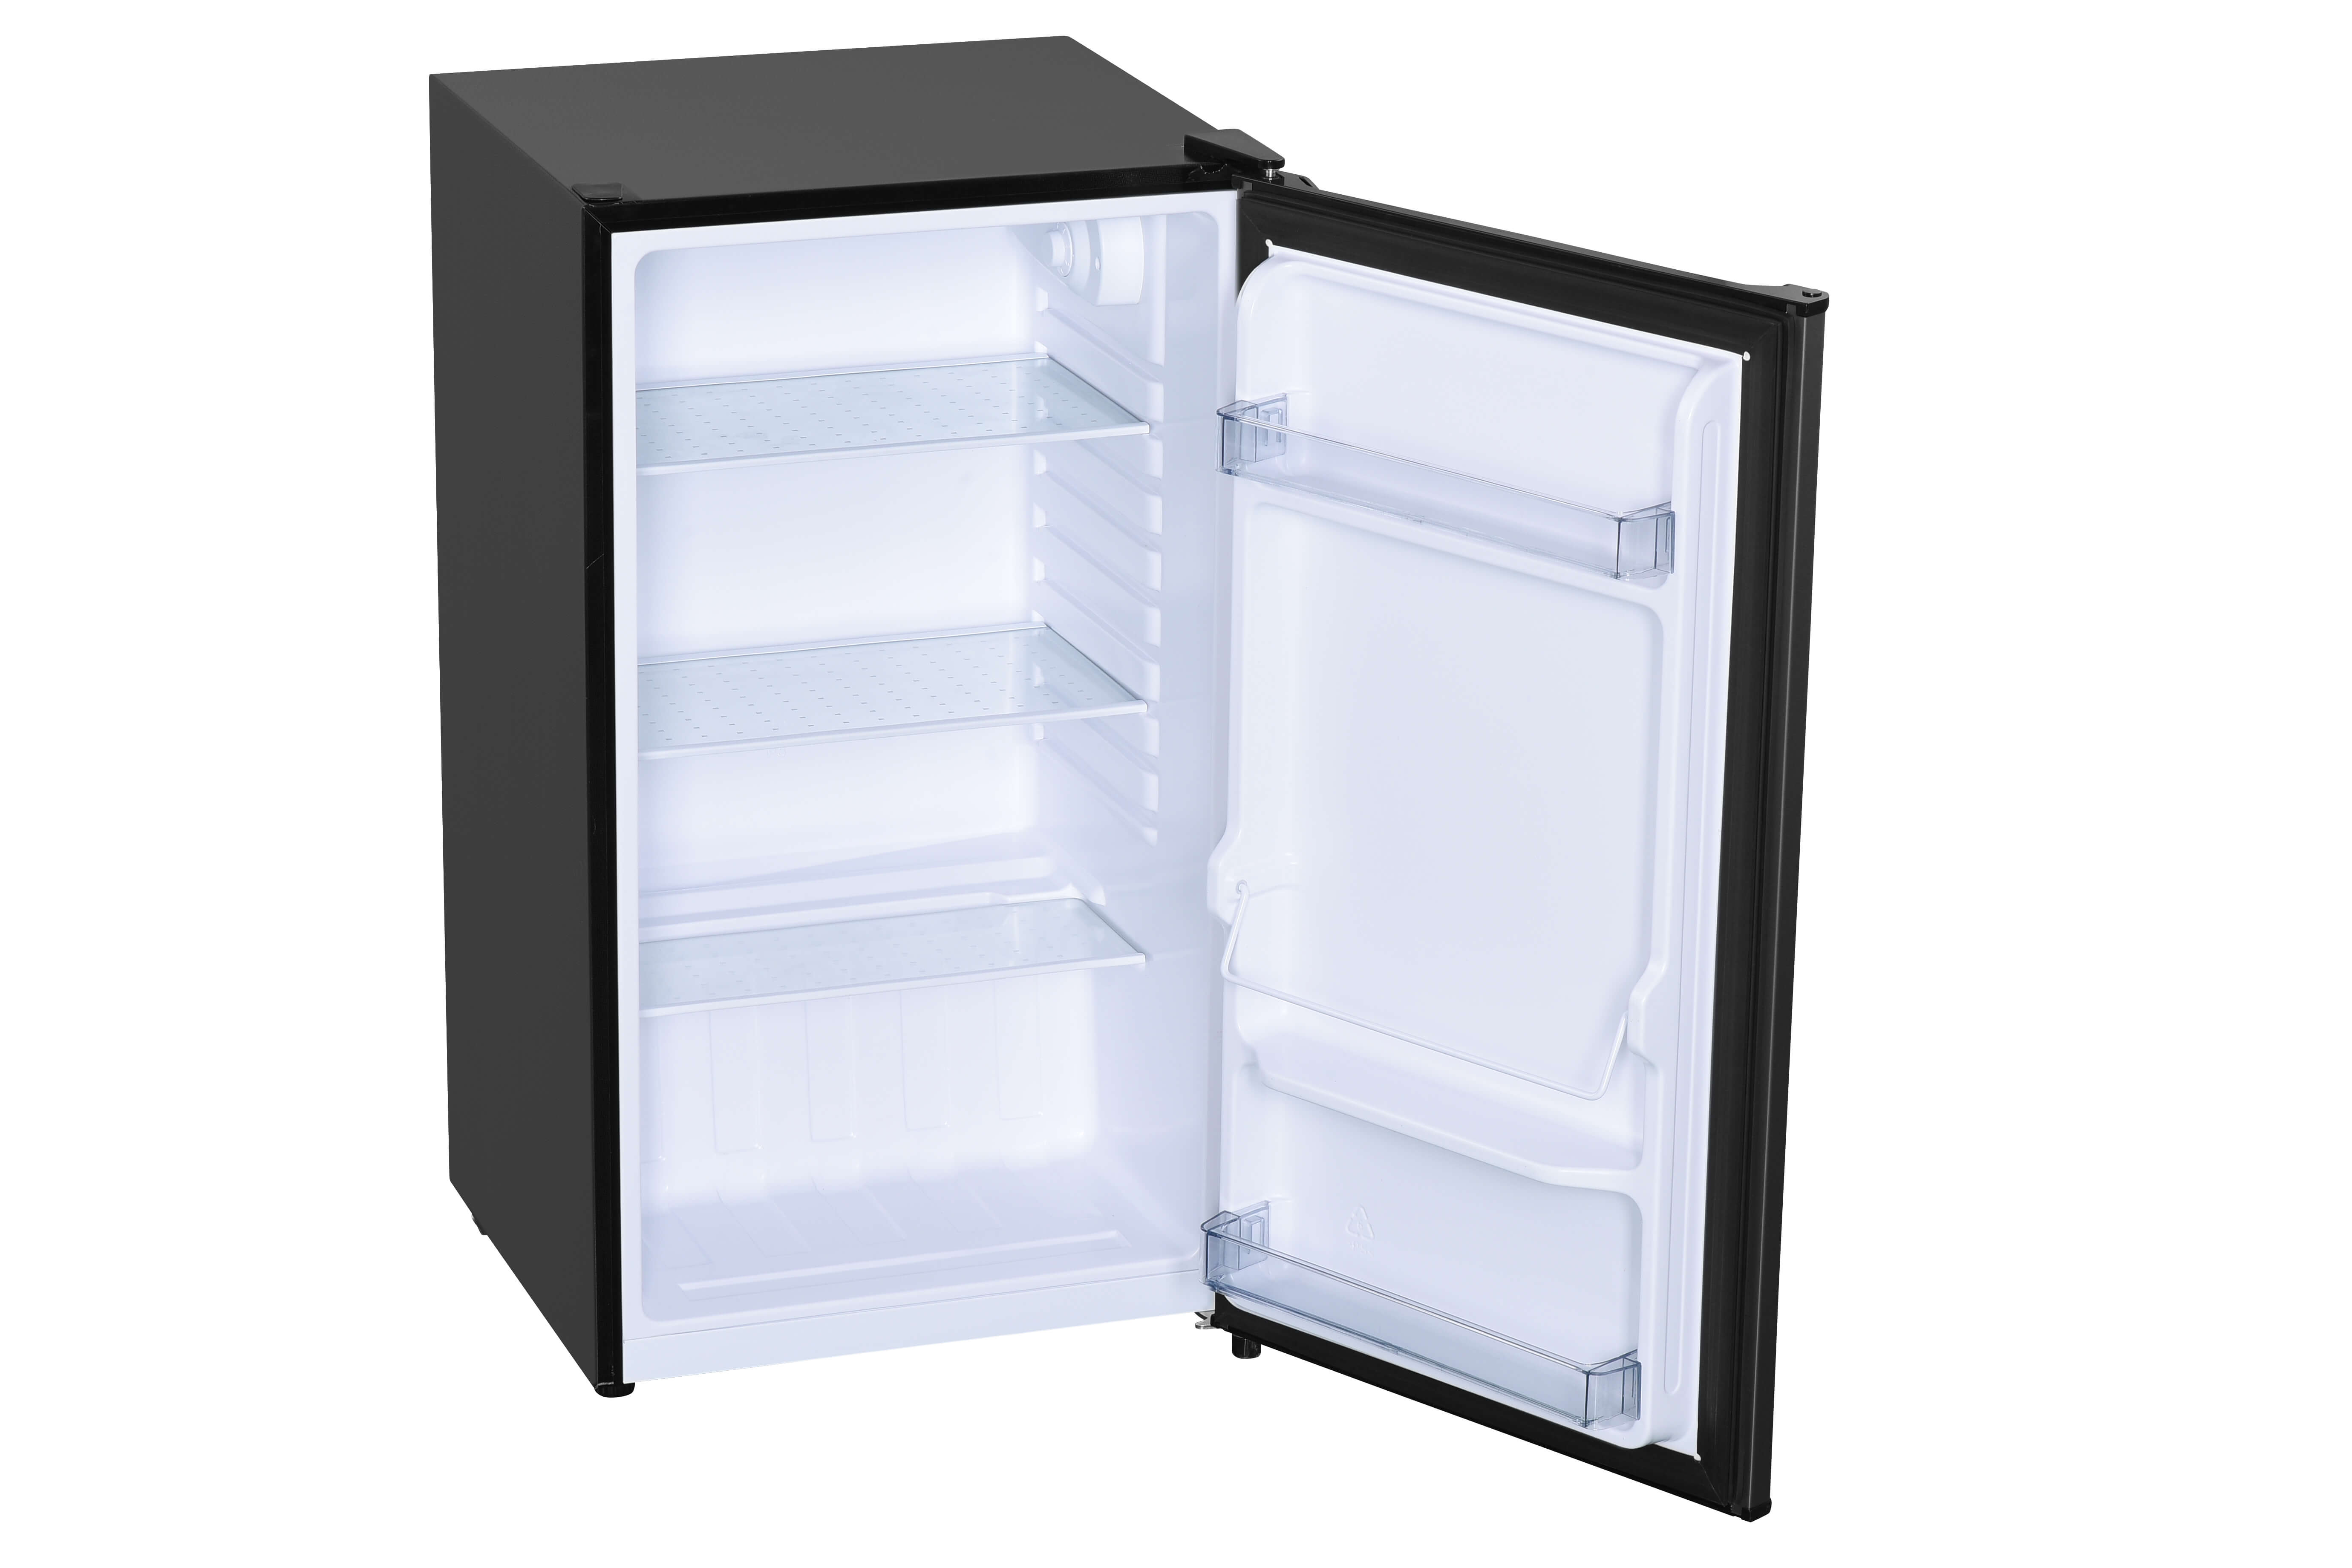 Danby 3.2 cu. ft. Compact Refrigerator